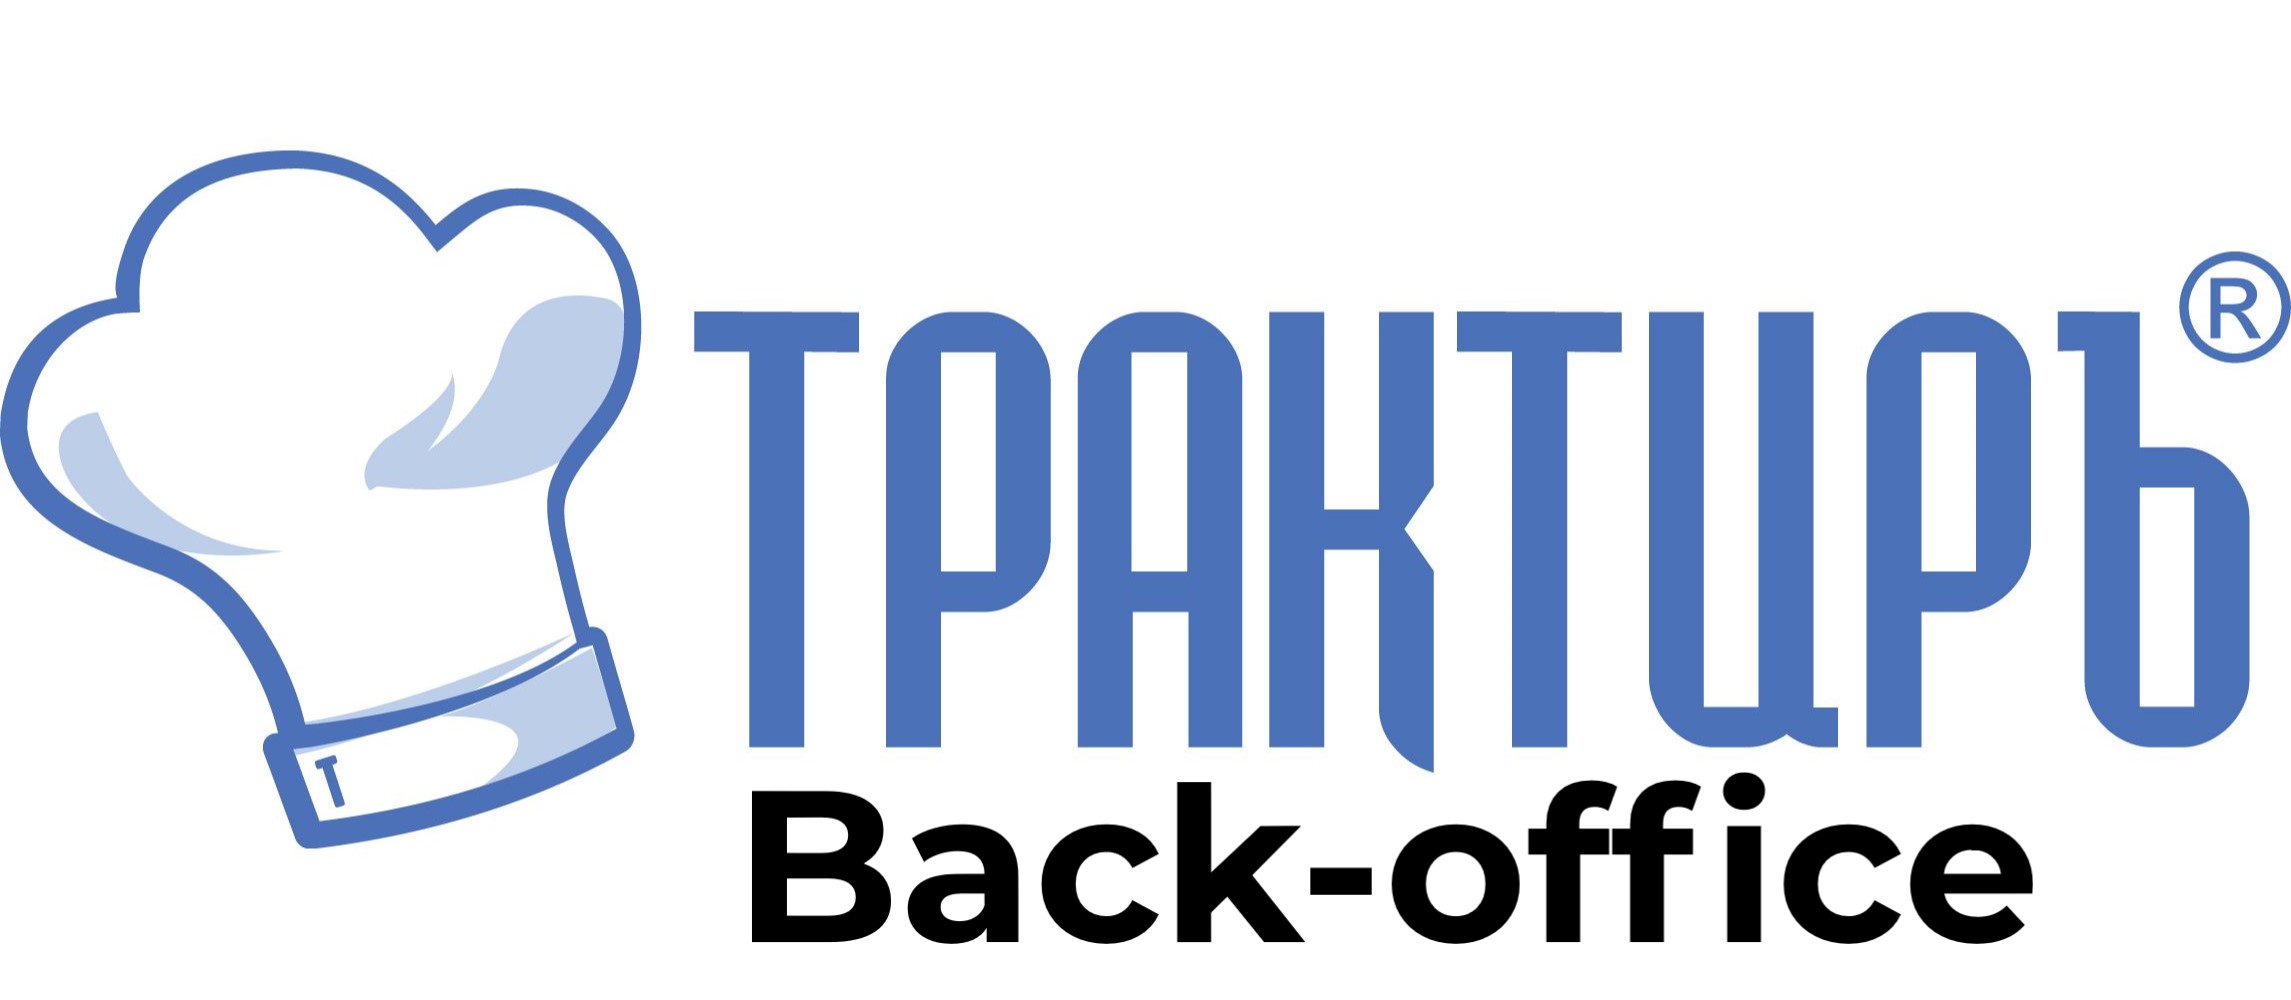 Трактиръ Back-Office ПРОФ, ред. 3.0 Основная поставка в Омске